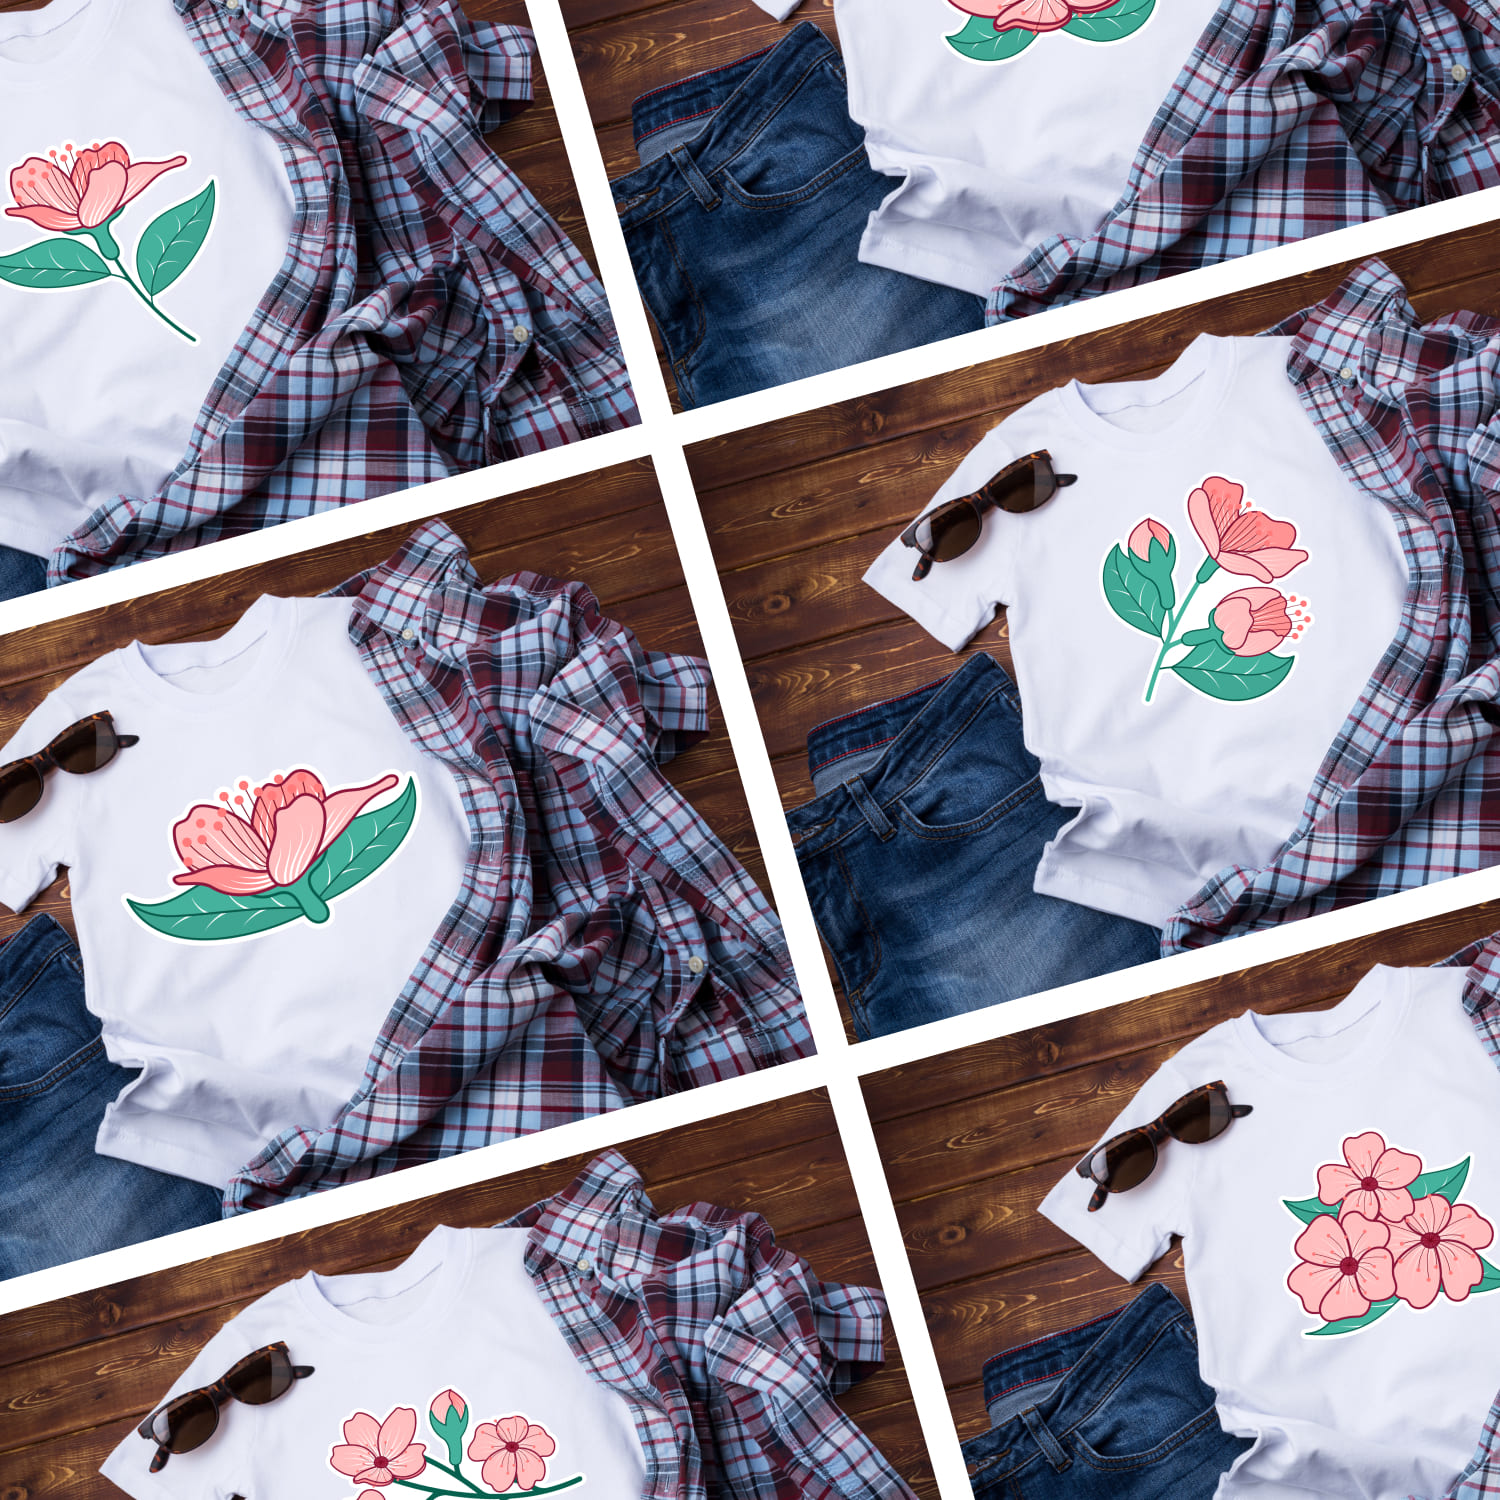 Prints sakura cherry blossom on t-shirt designs.